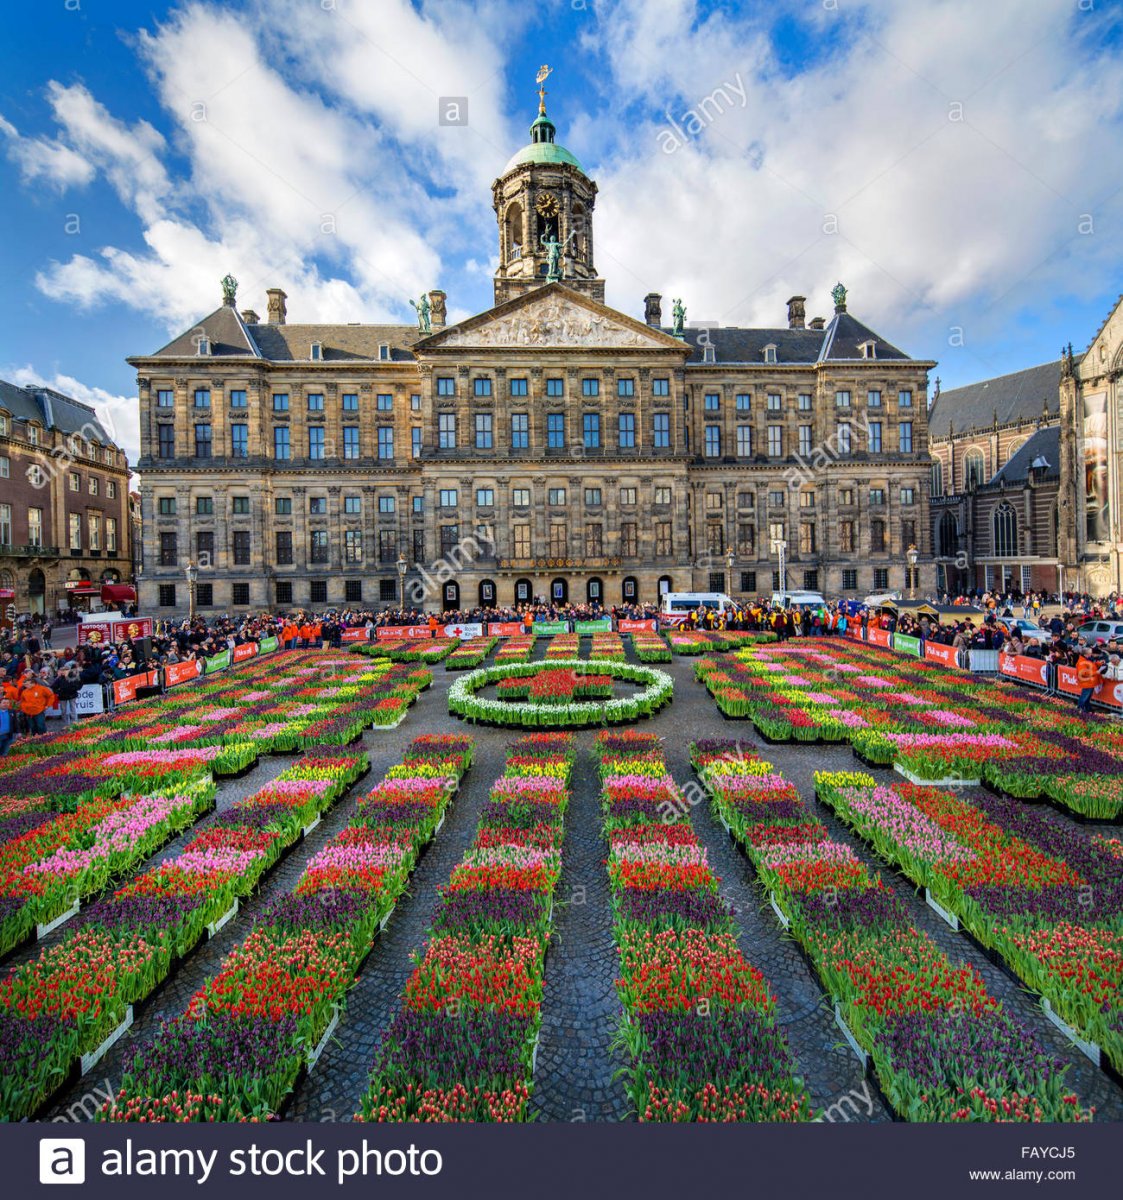 netherlands-amsterdam-start-of-tulip-season-dam-square-royal-palace-FAYCJ5.jpg